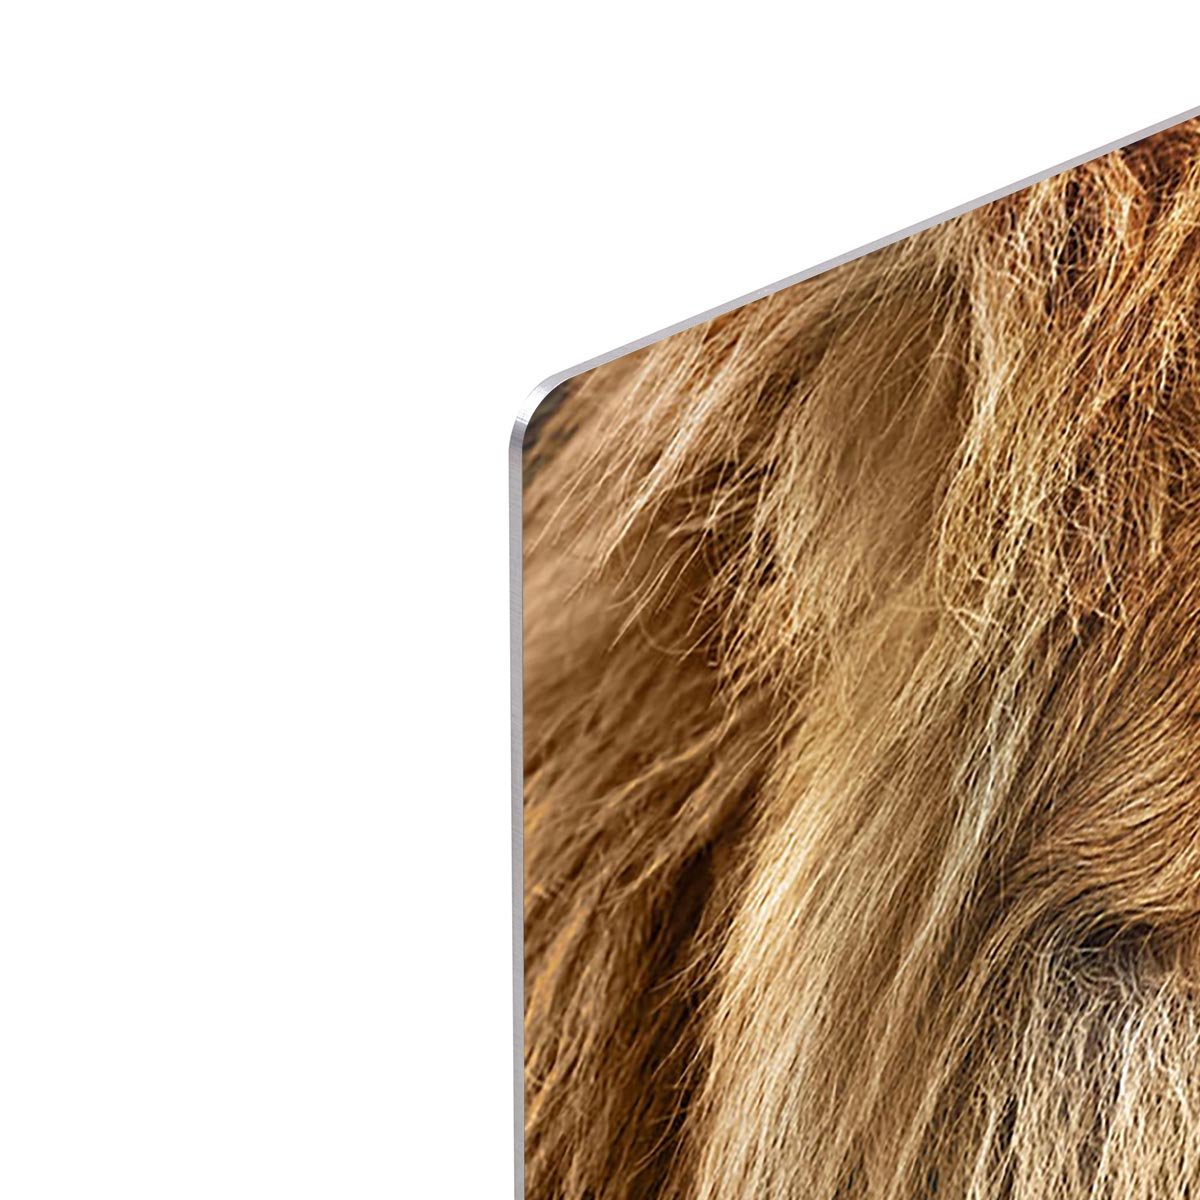 Lion portrait on savanna HD Metal Print - Canvas Art Rocks - 4